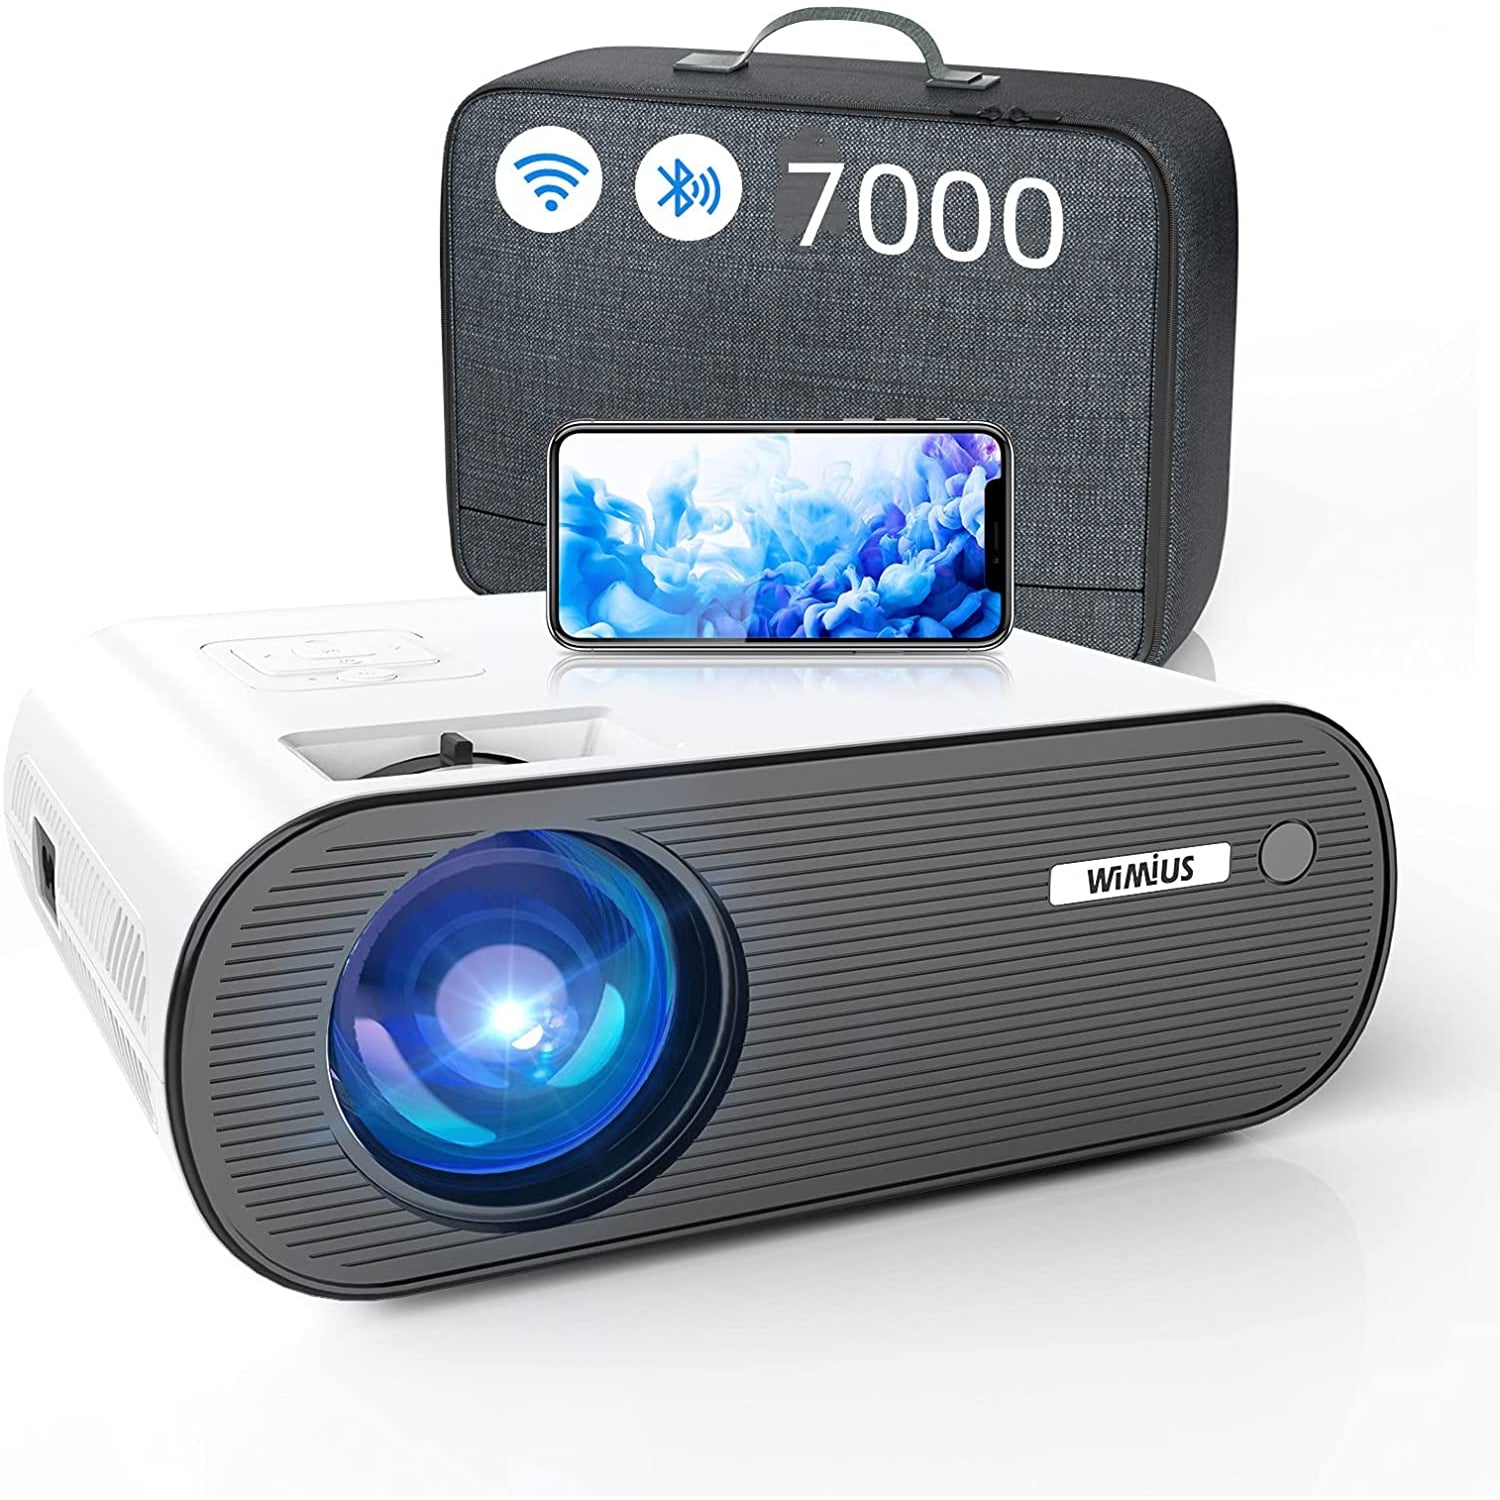 Bluetooth WiFi Projector WiMiUS K5 Mini Video Projector HD 1080P LED Projector